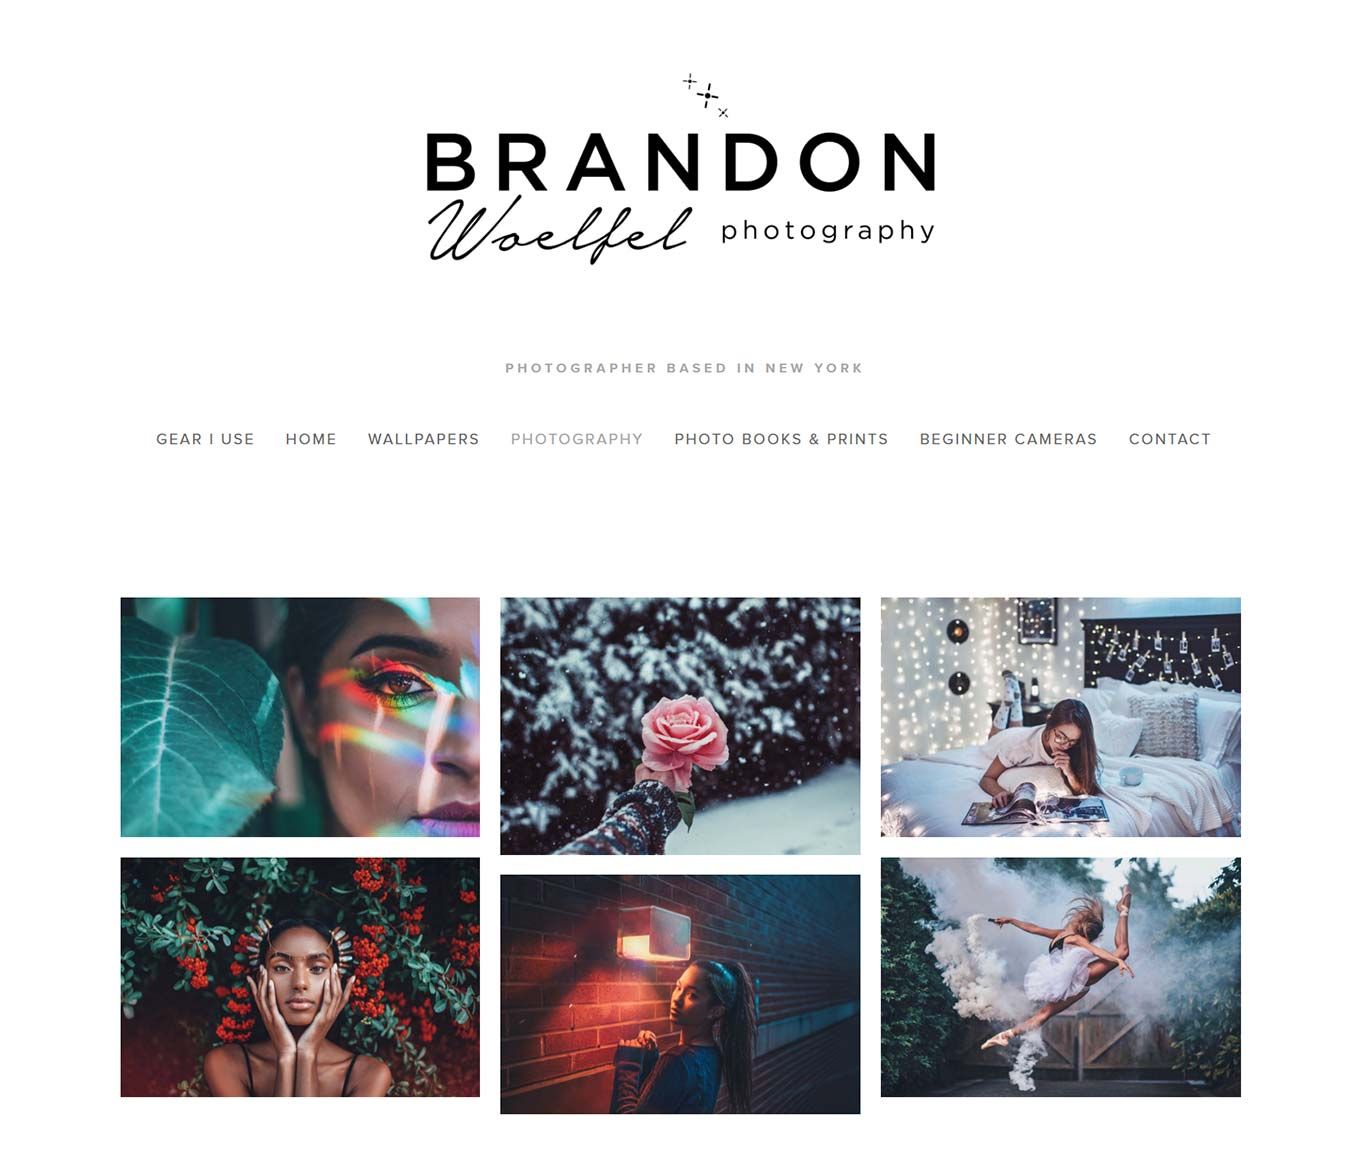 Brandon Woelfel website